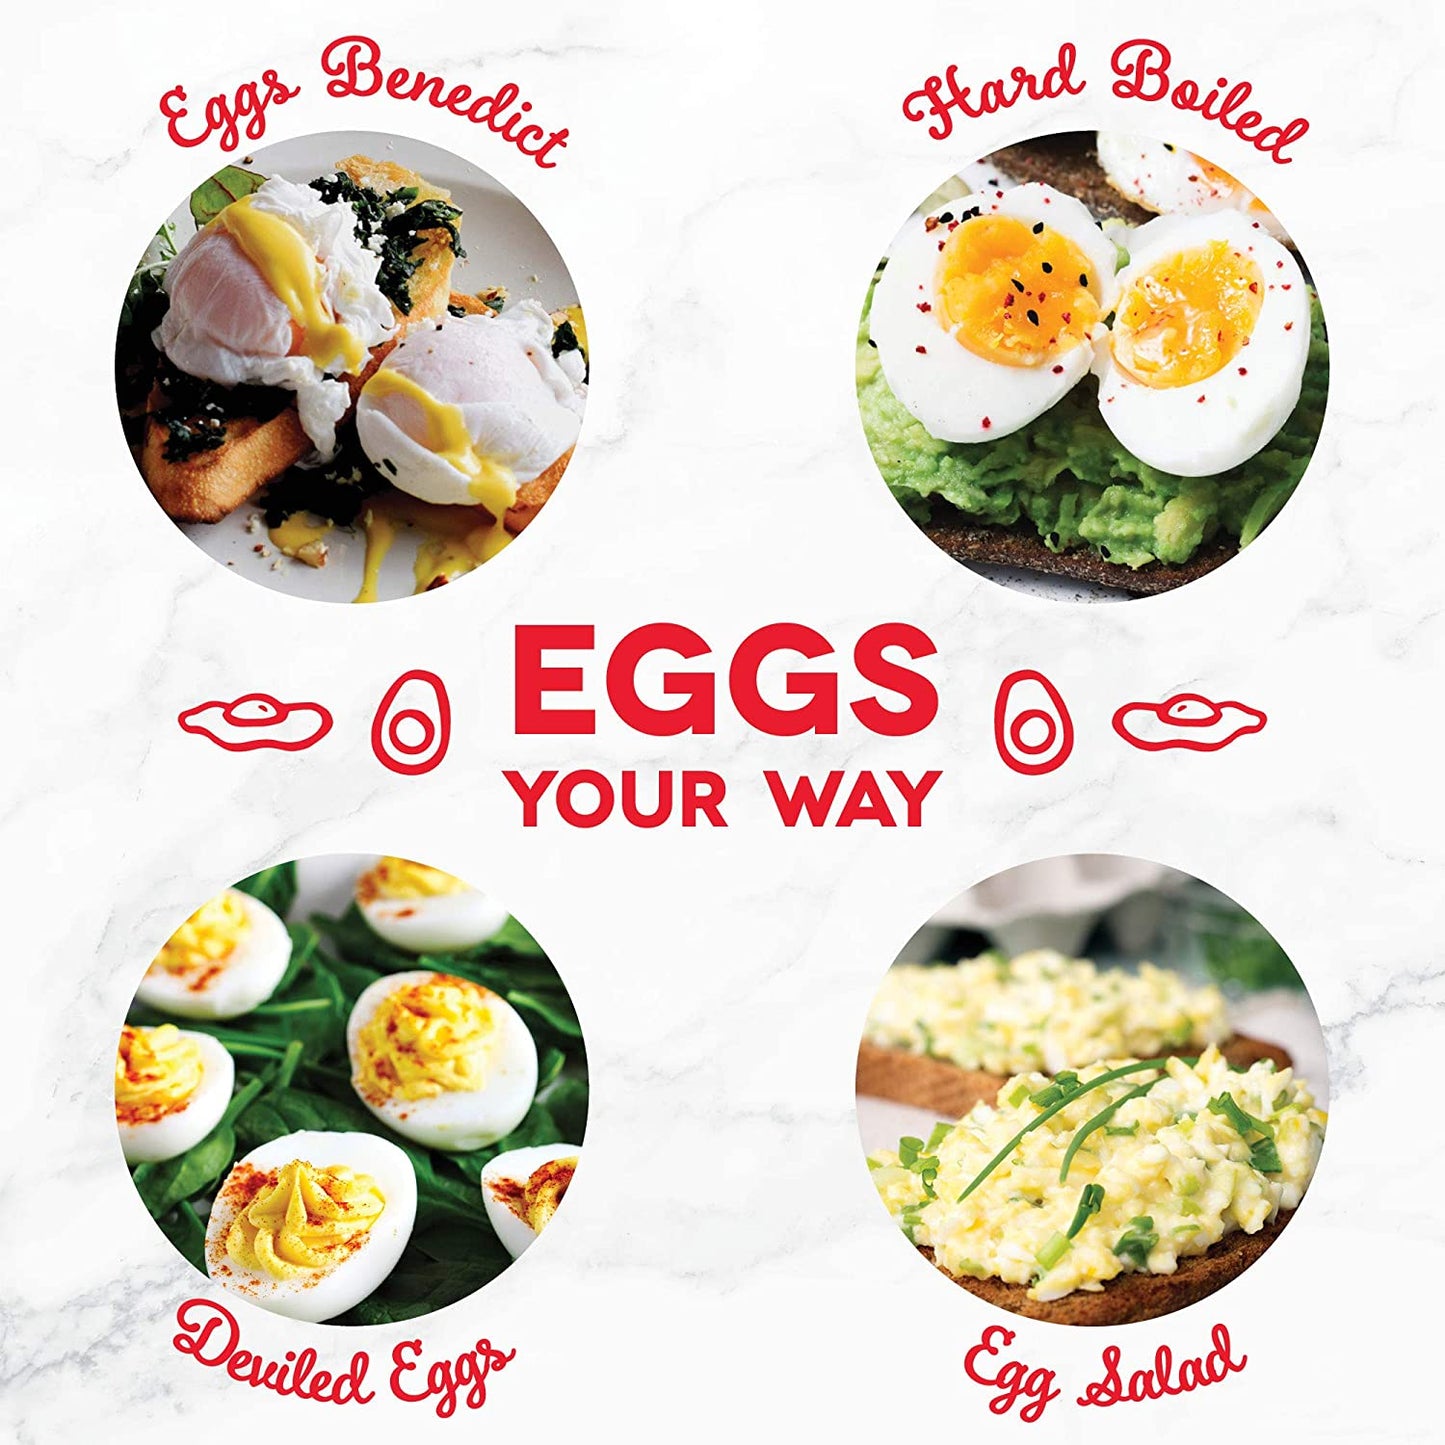 DASH Rapid Egg Cooker: 6 Egg Capacity Electric Egg Cooker for Hard Boiled Eggs, Poached Eggs, Scrambled Eggs.